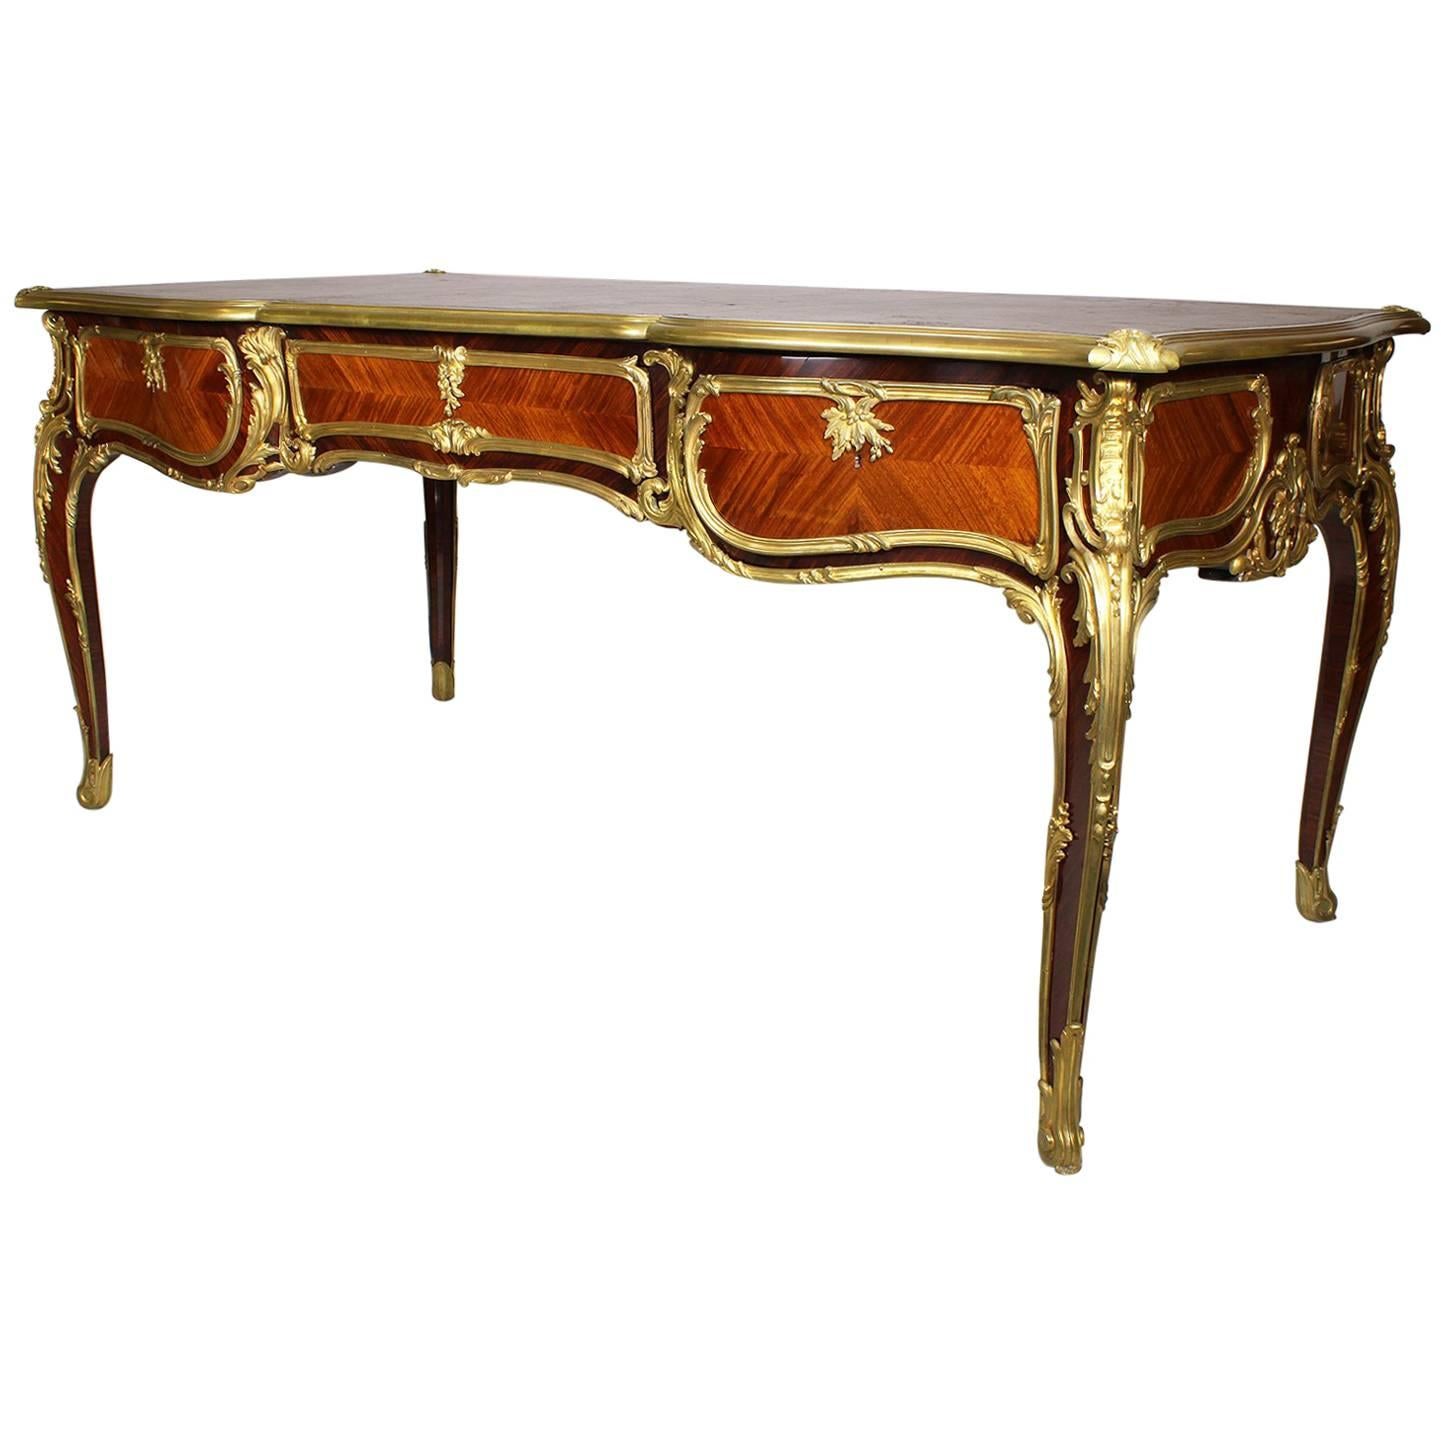 French 19th Century Louis XV Style Kingwood Gilt-Bronze Mounted Bureau Plat Desk For Sale